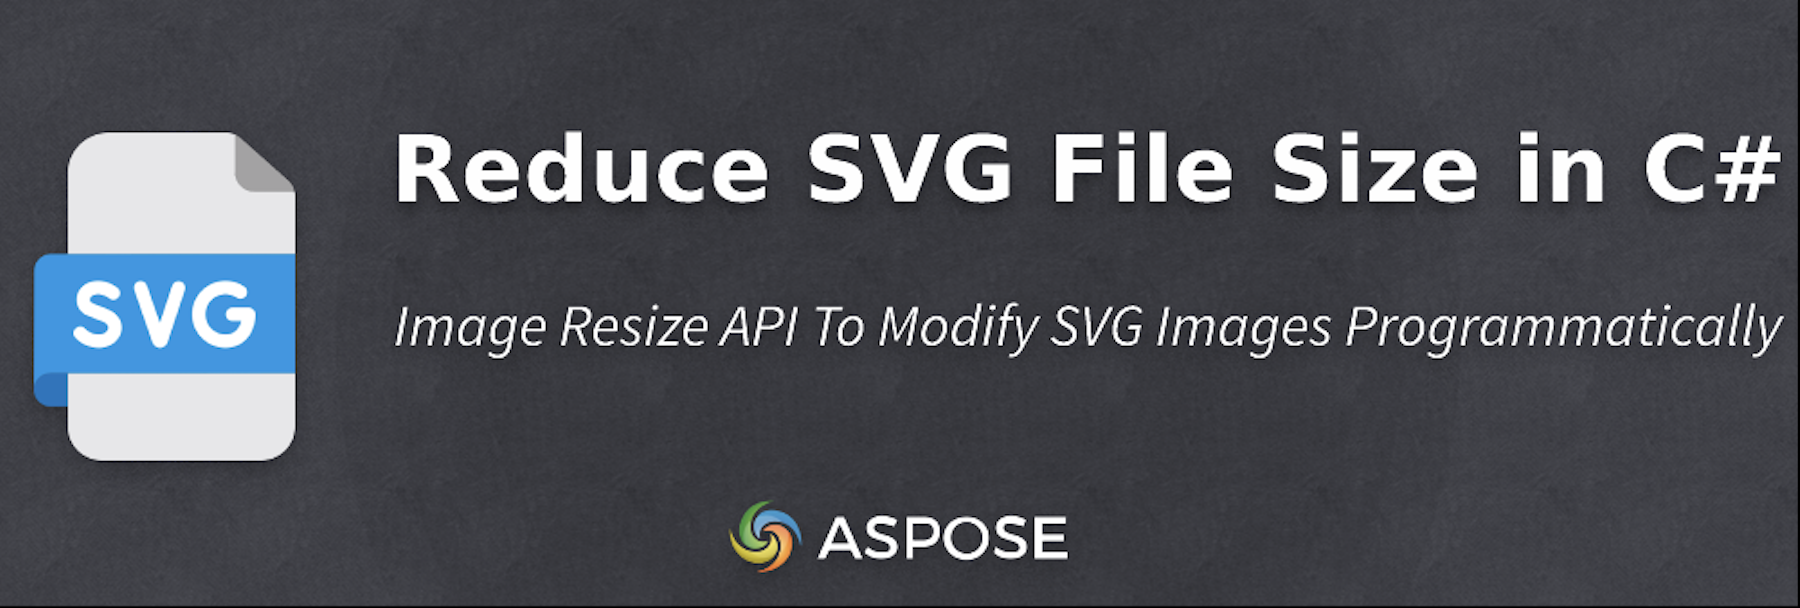 Reduce SVG File Size in C# - Image Resize API